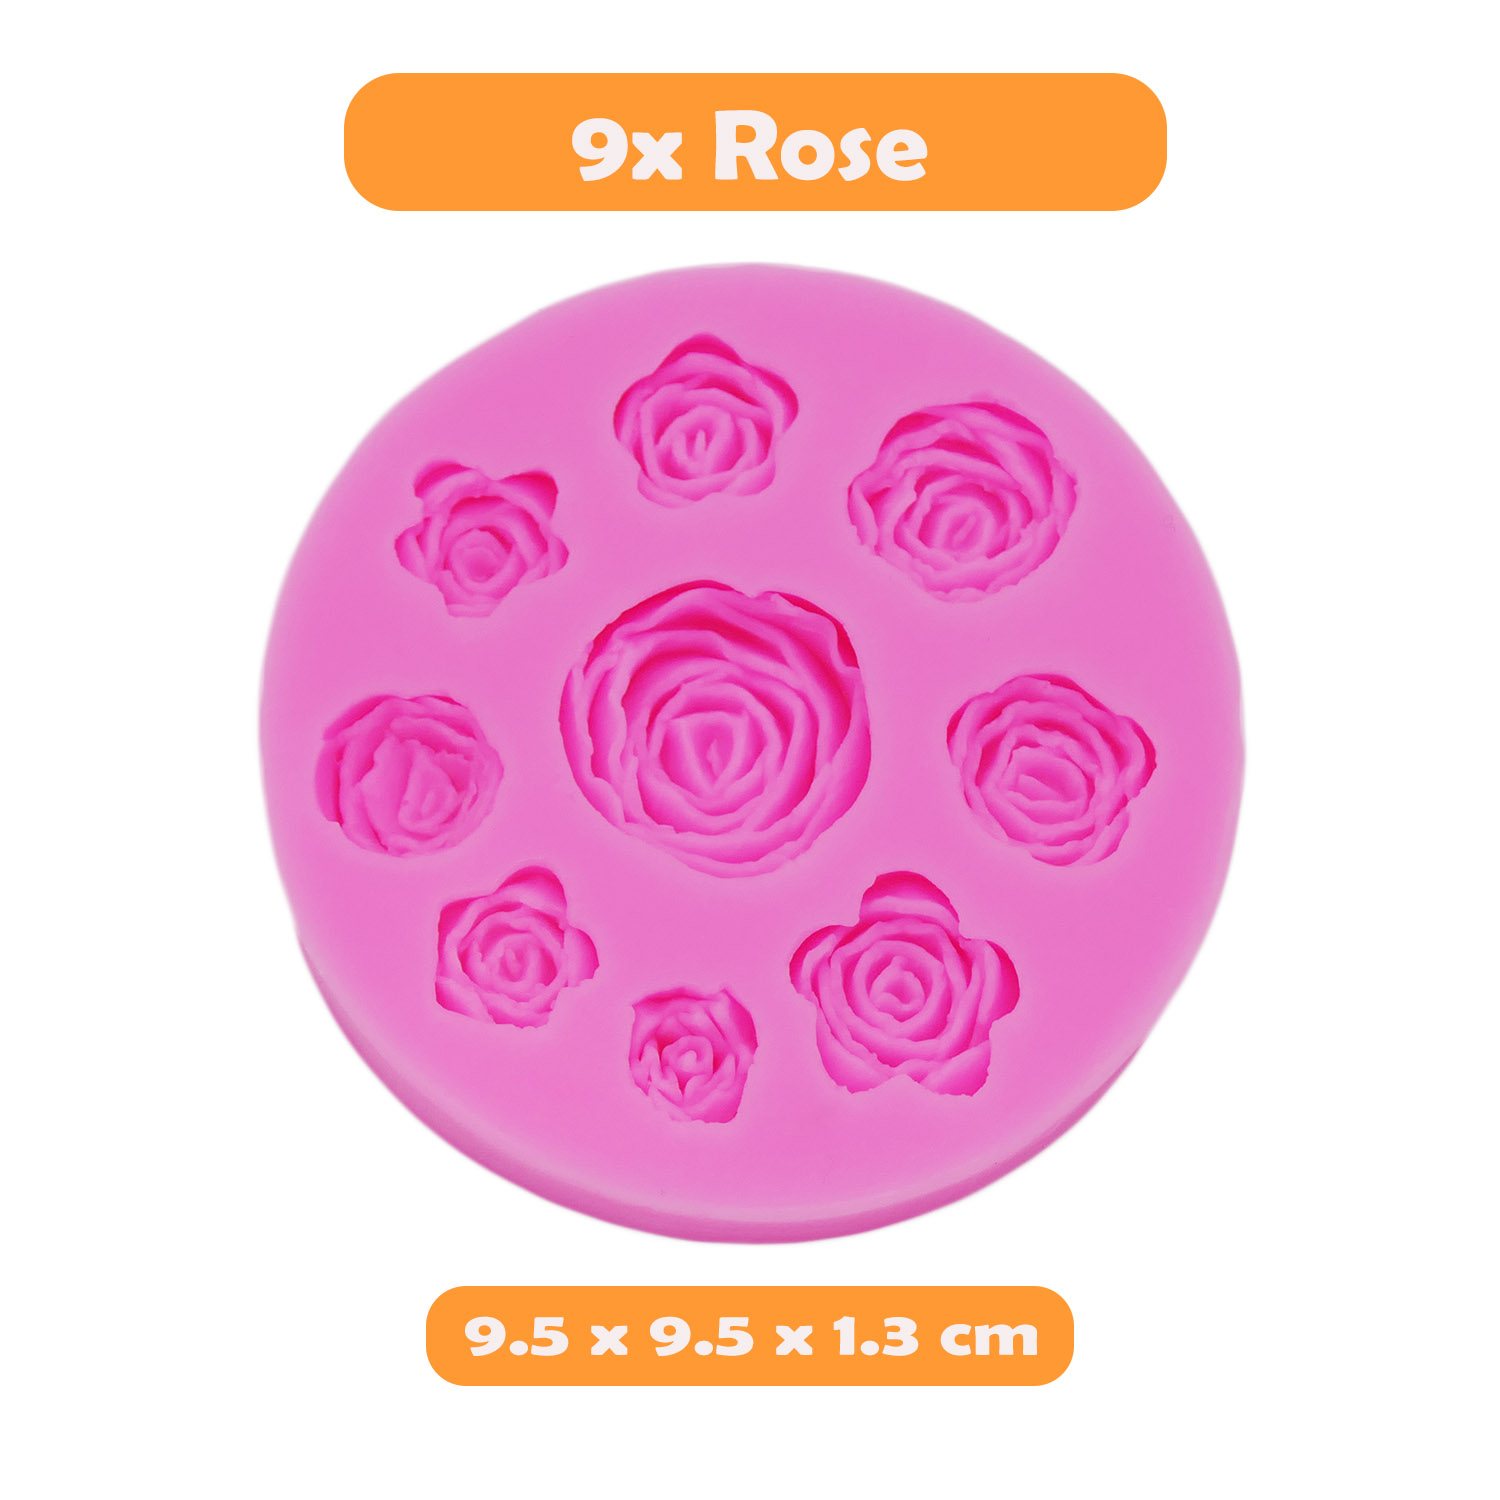 Rosa SIMUER 3D Blumen Form Silikon Backform Fondant Ausstechform Kuchen Fondant Dekorieren Schokoladenform DIY handgefertigt Tools 5 Stück